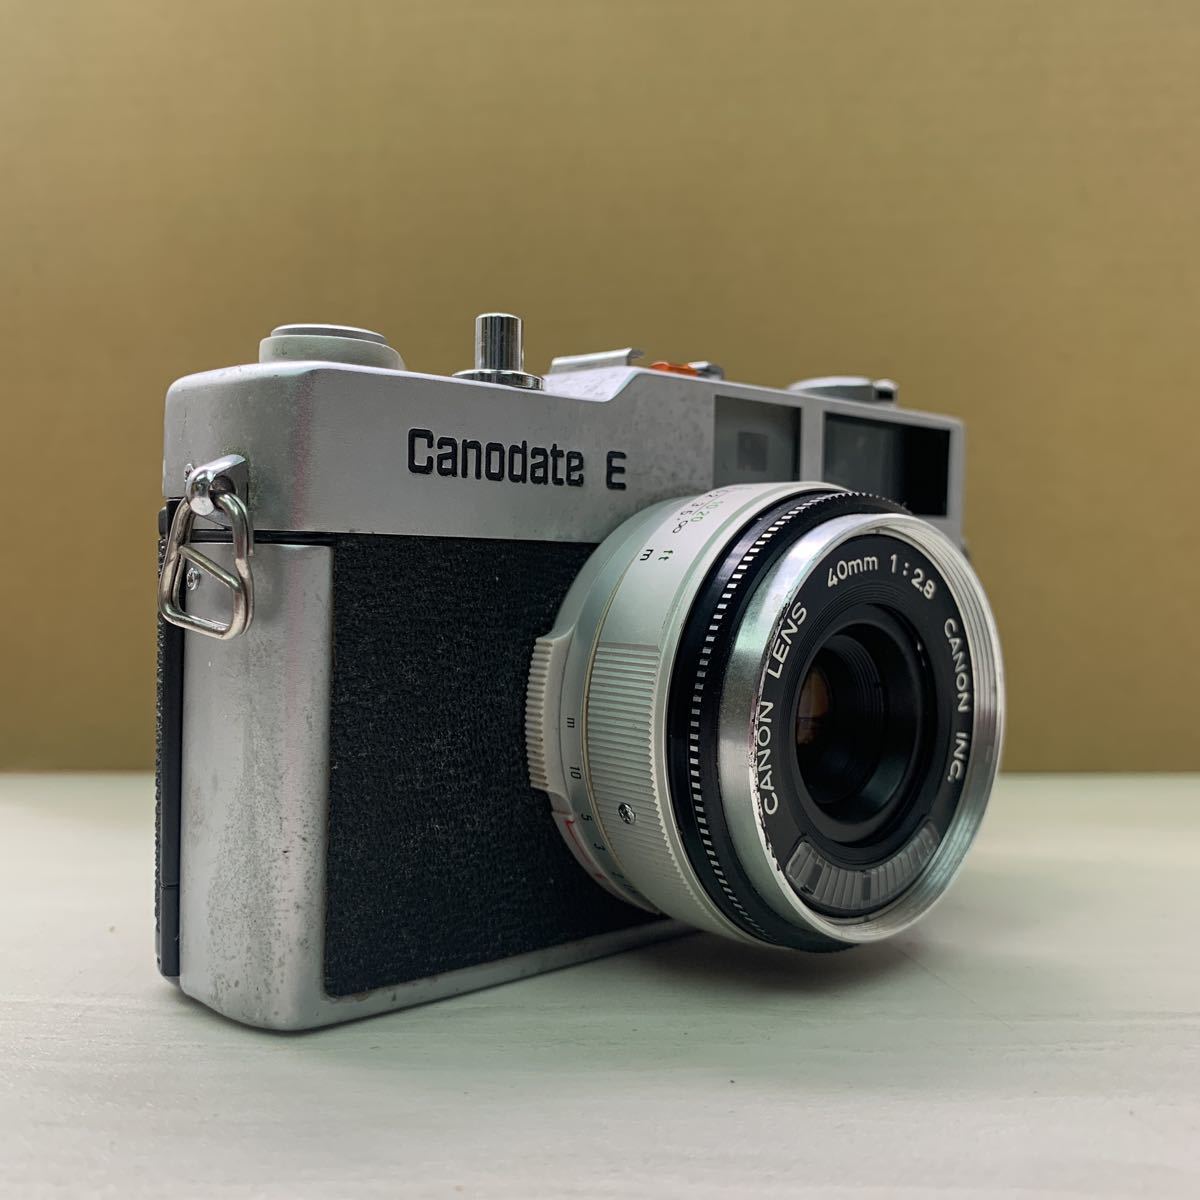 Canon Canodate E Canon range finder film camera not yet verification 3995